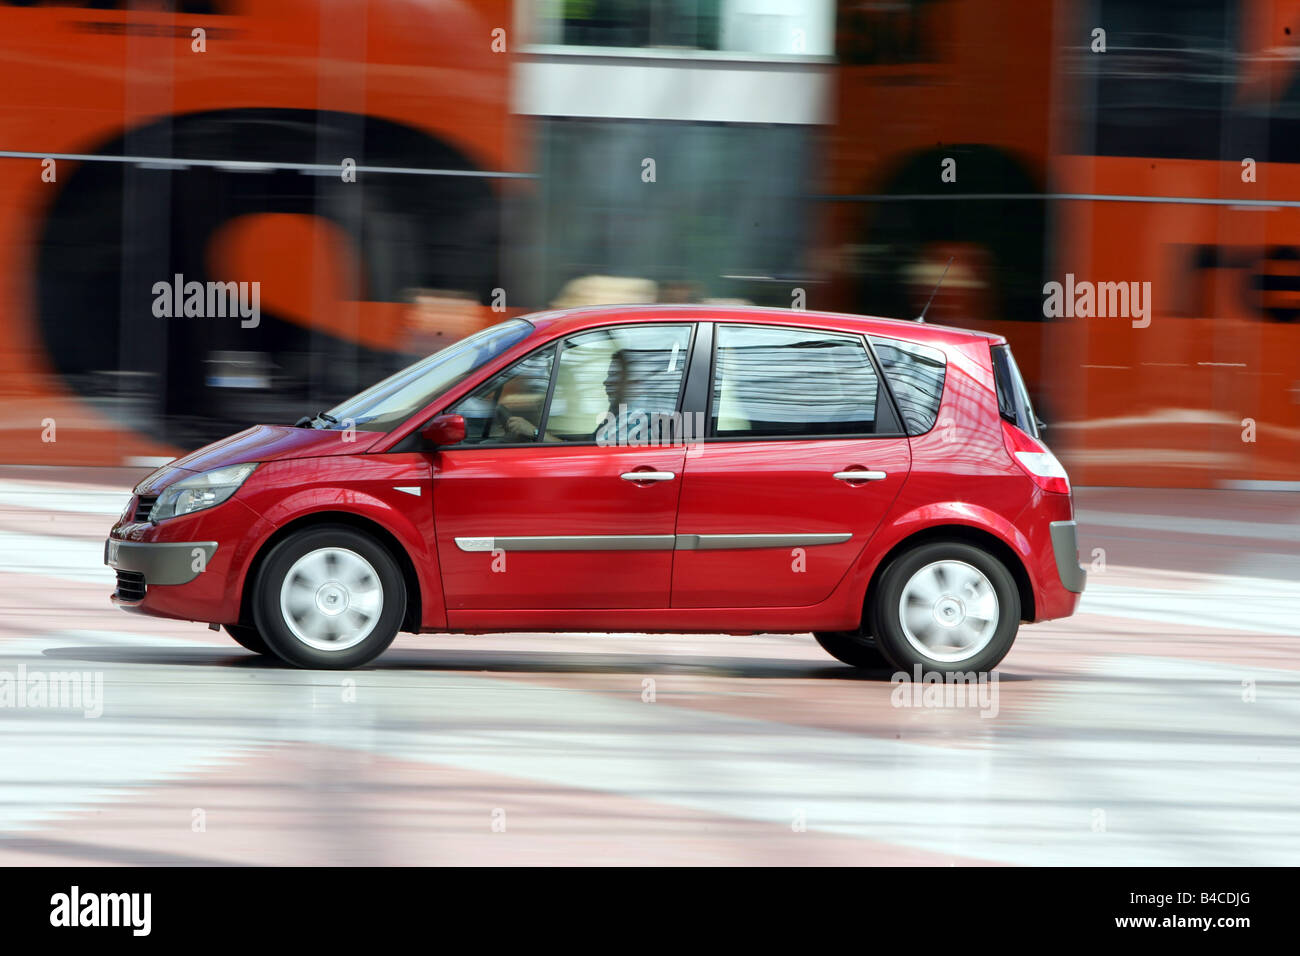 Car, Renault Scenic 1.0 dCi, model year 2005-, red, Van, driving, side  view, City, photographer: Hans Dieter Seufert Stock Photo - Alamy